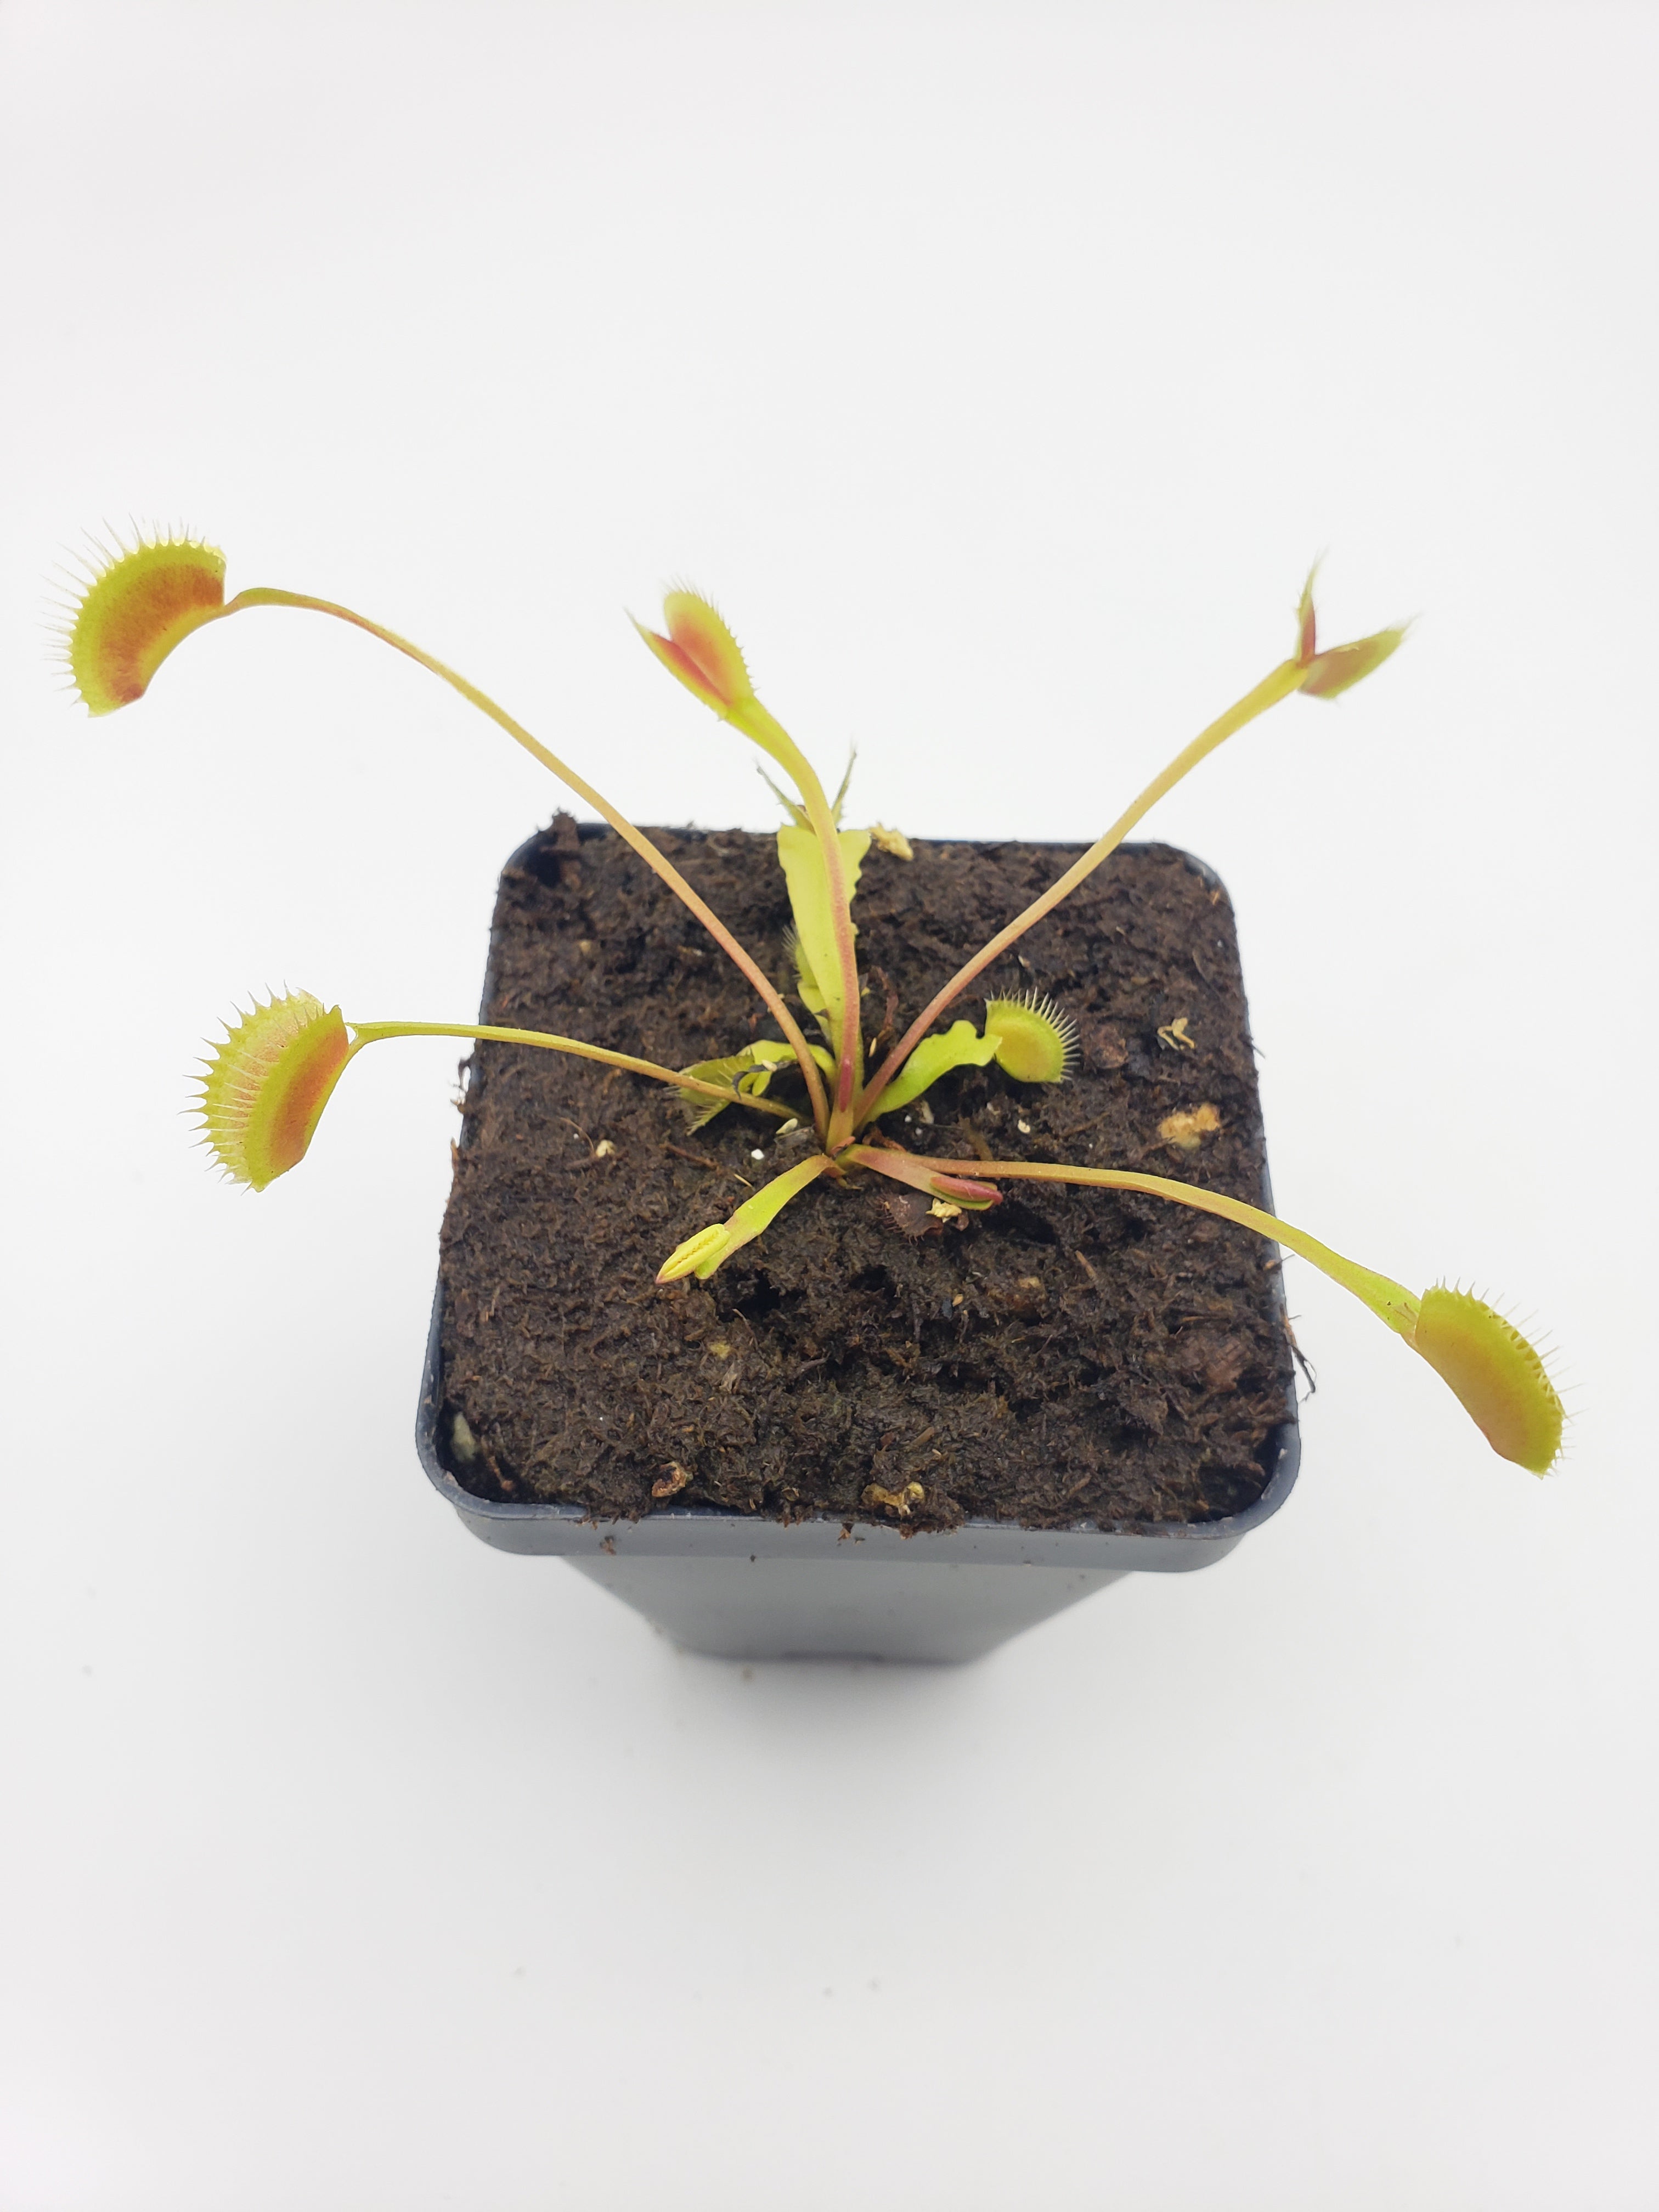 Venus flytrap (Dionaea muscipula) 'La Grosse a Guigui' - Rainbow Carnivorous Plants LLC